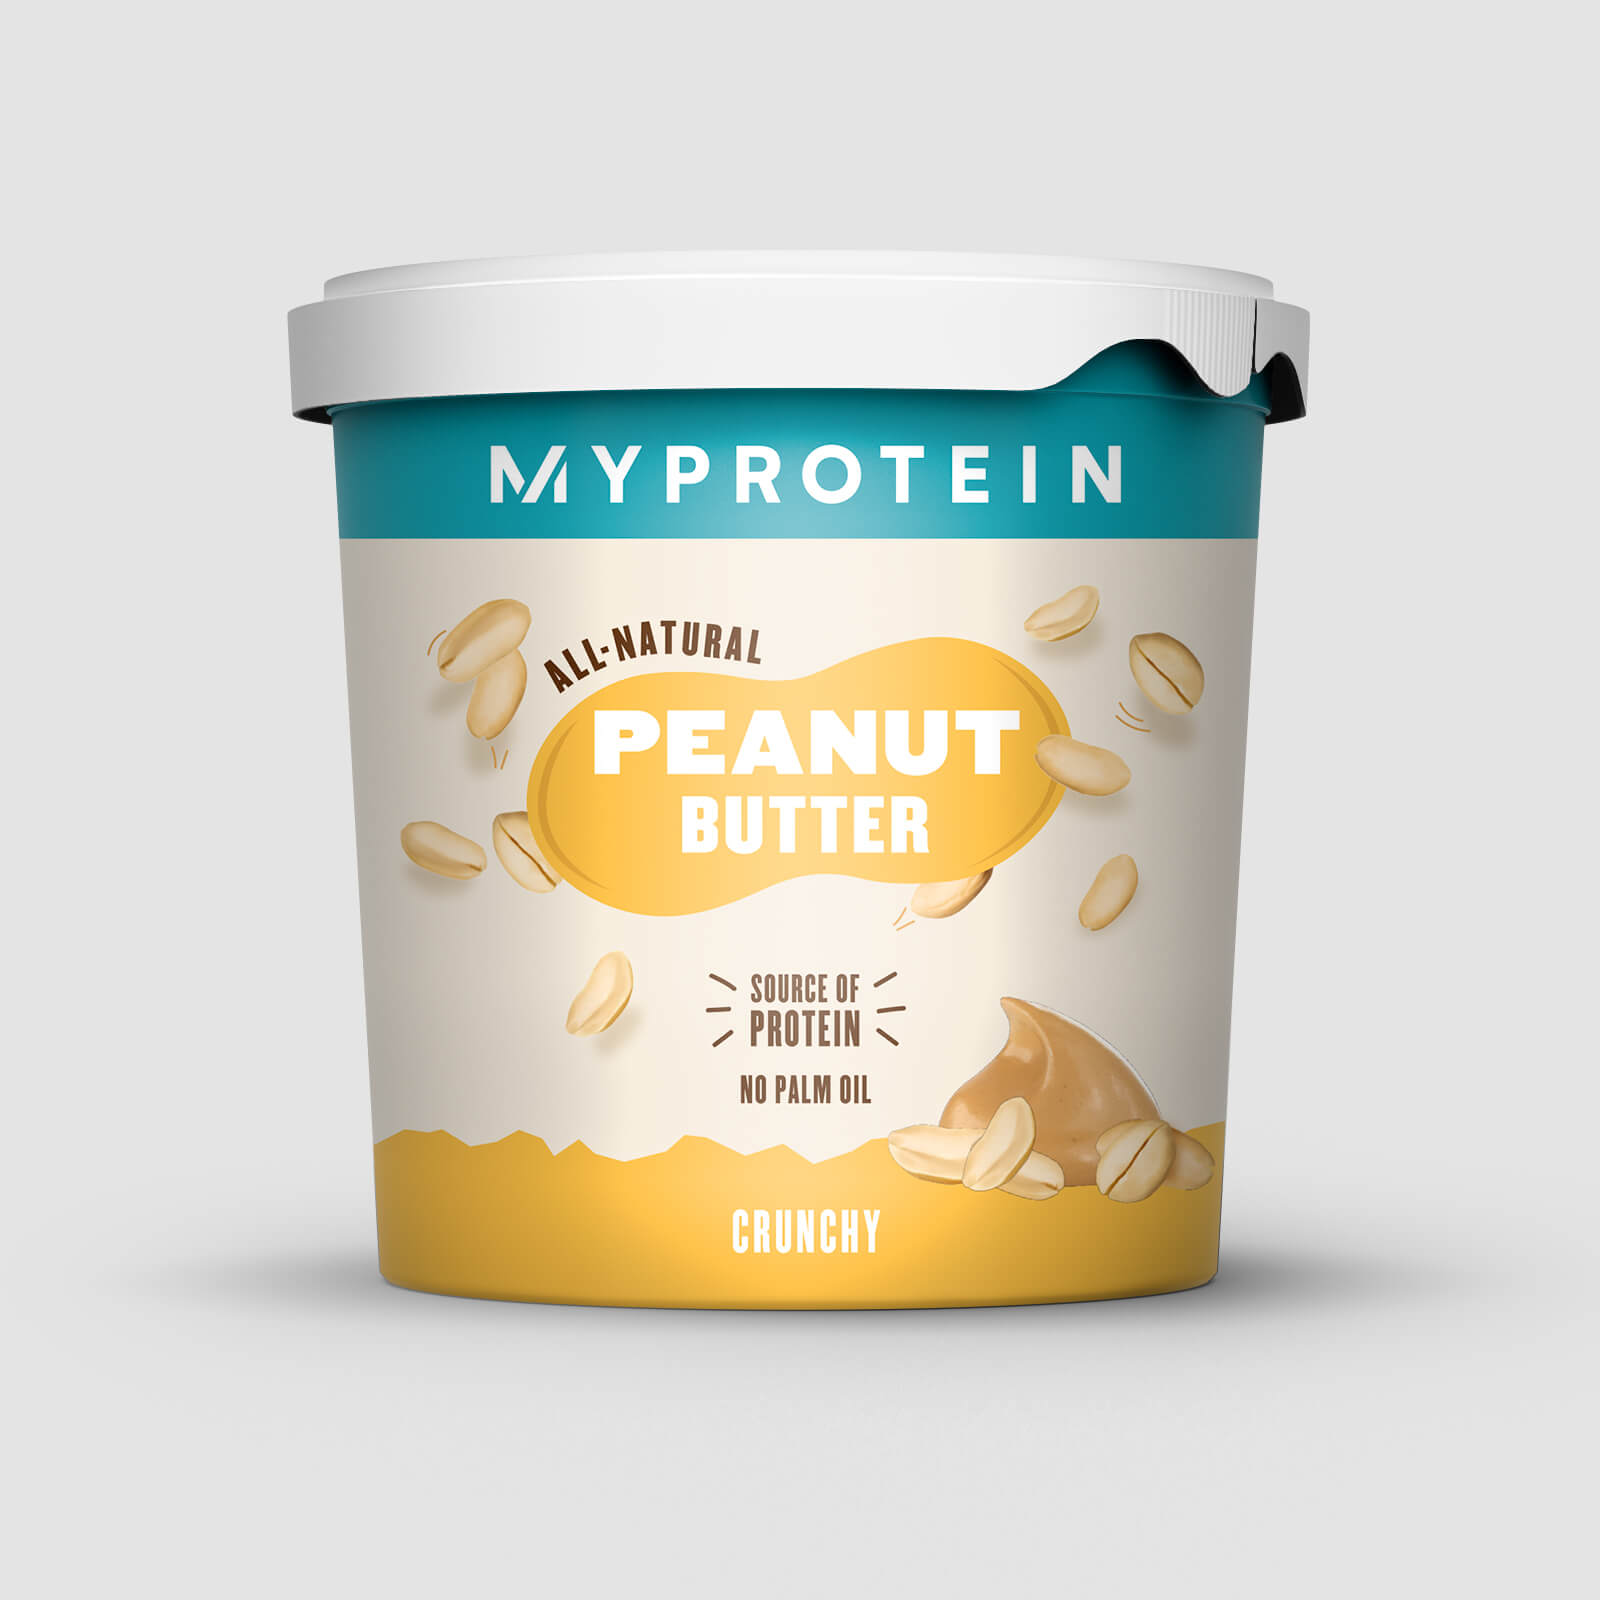 Myprotein All-Natural Peanut Butter - Original - Crunchy